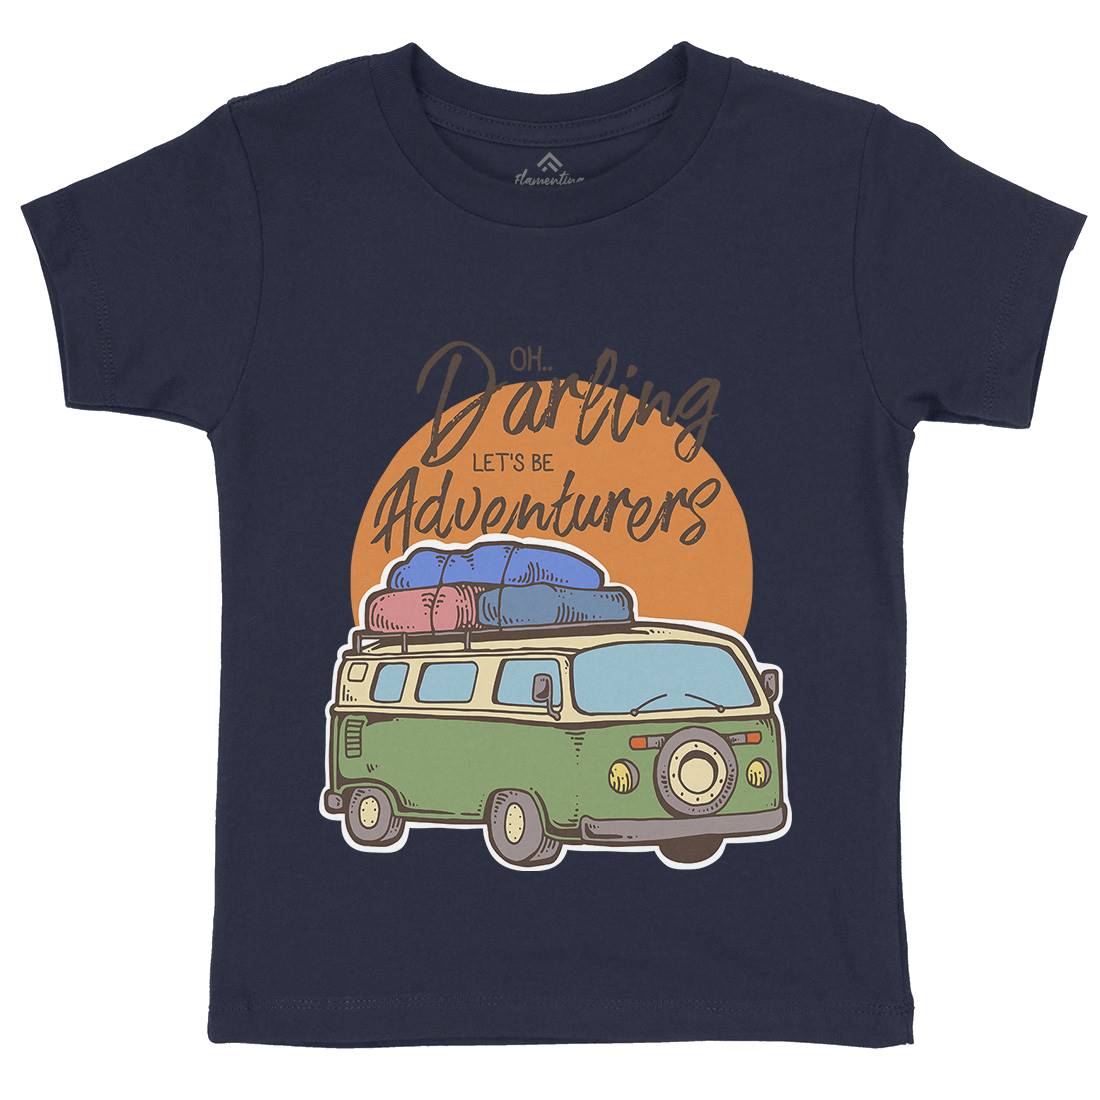 Be Adventurers Kids Crew Neck T-Shirt Nature C707